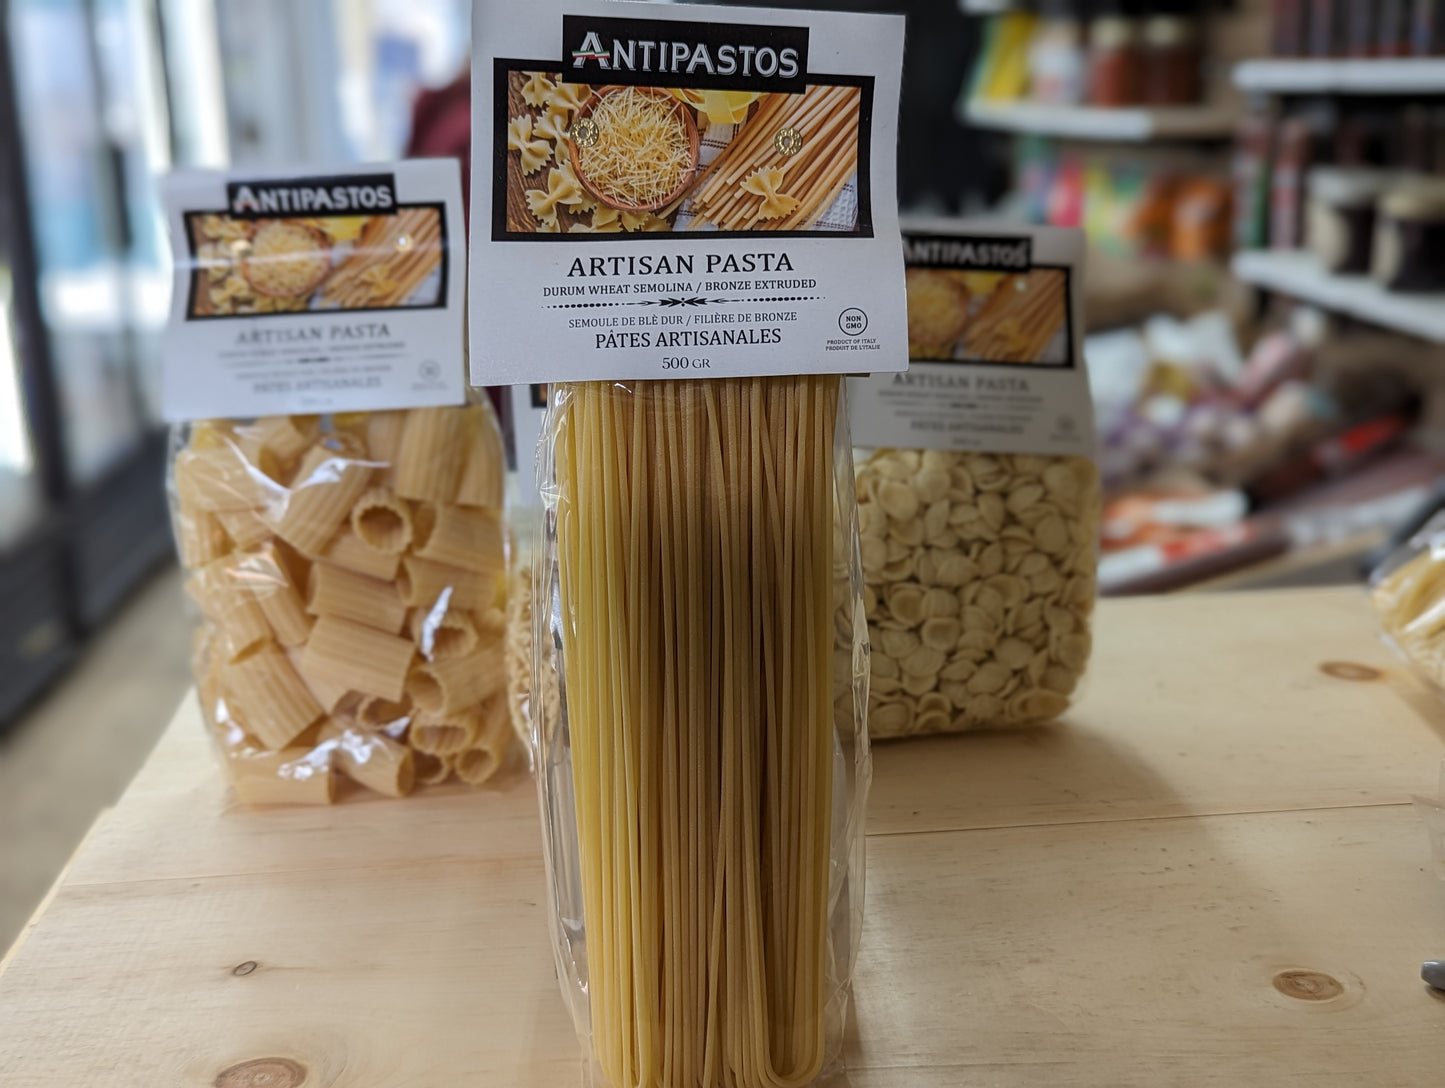 Spaghetti Artisan Pasta 500g- Antipastos